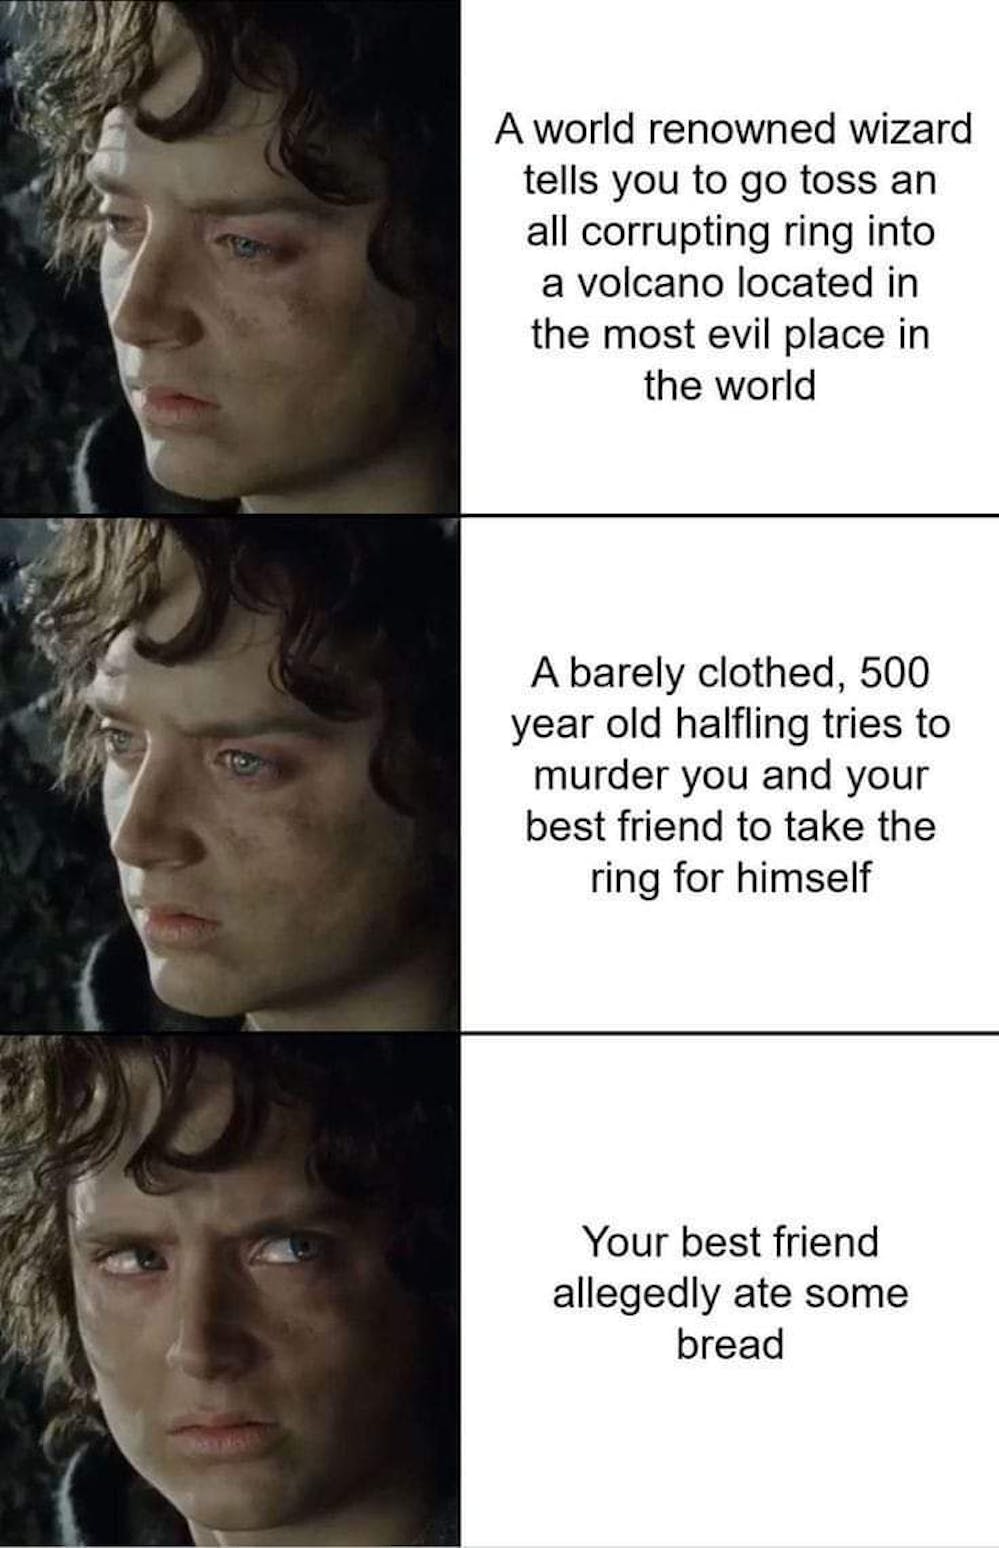 Meme met afbeeldingen uit de 'Lord of the Rings'-films.